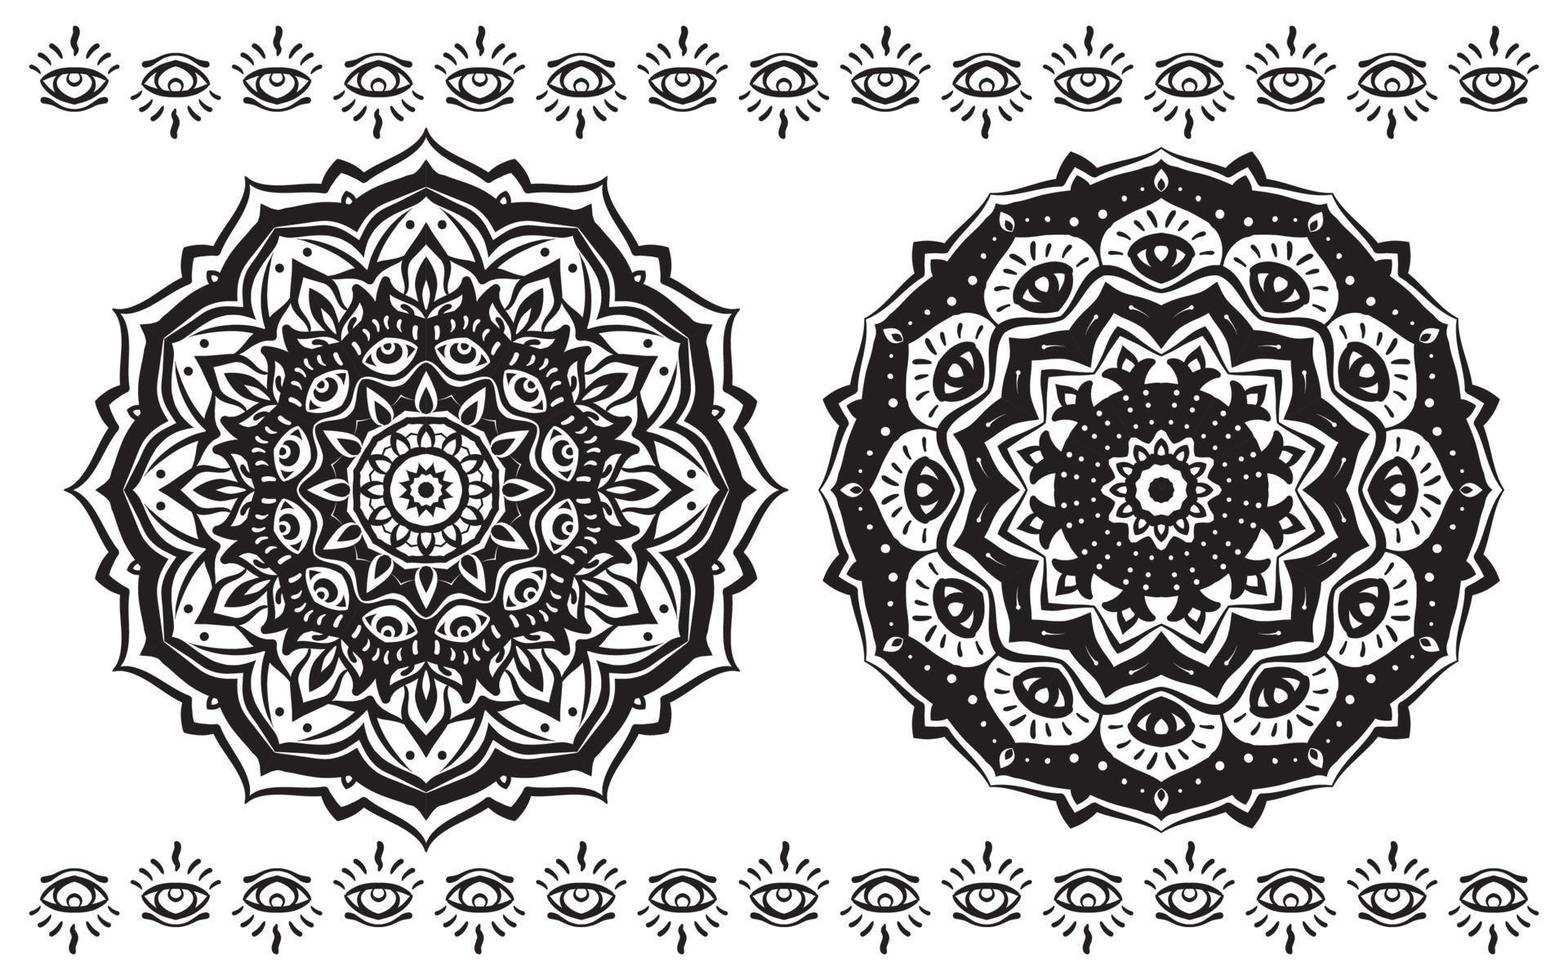 abstraktes Mandala Trippy Eyes traditionelle runde Dekoration vektor